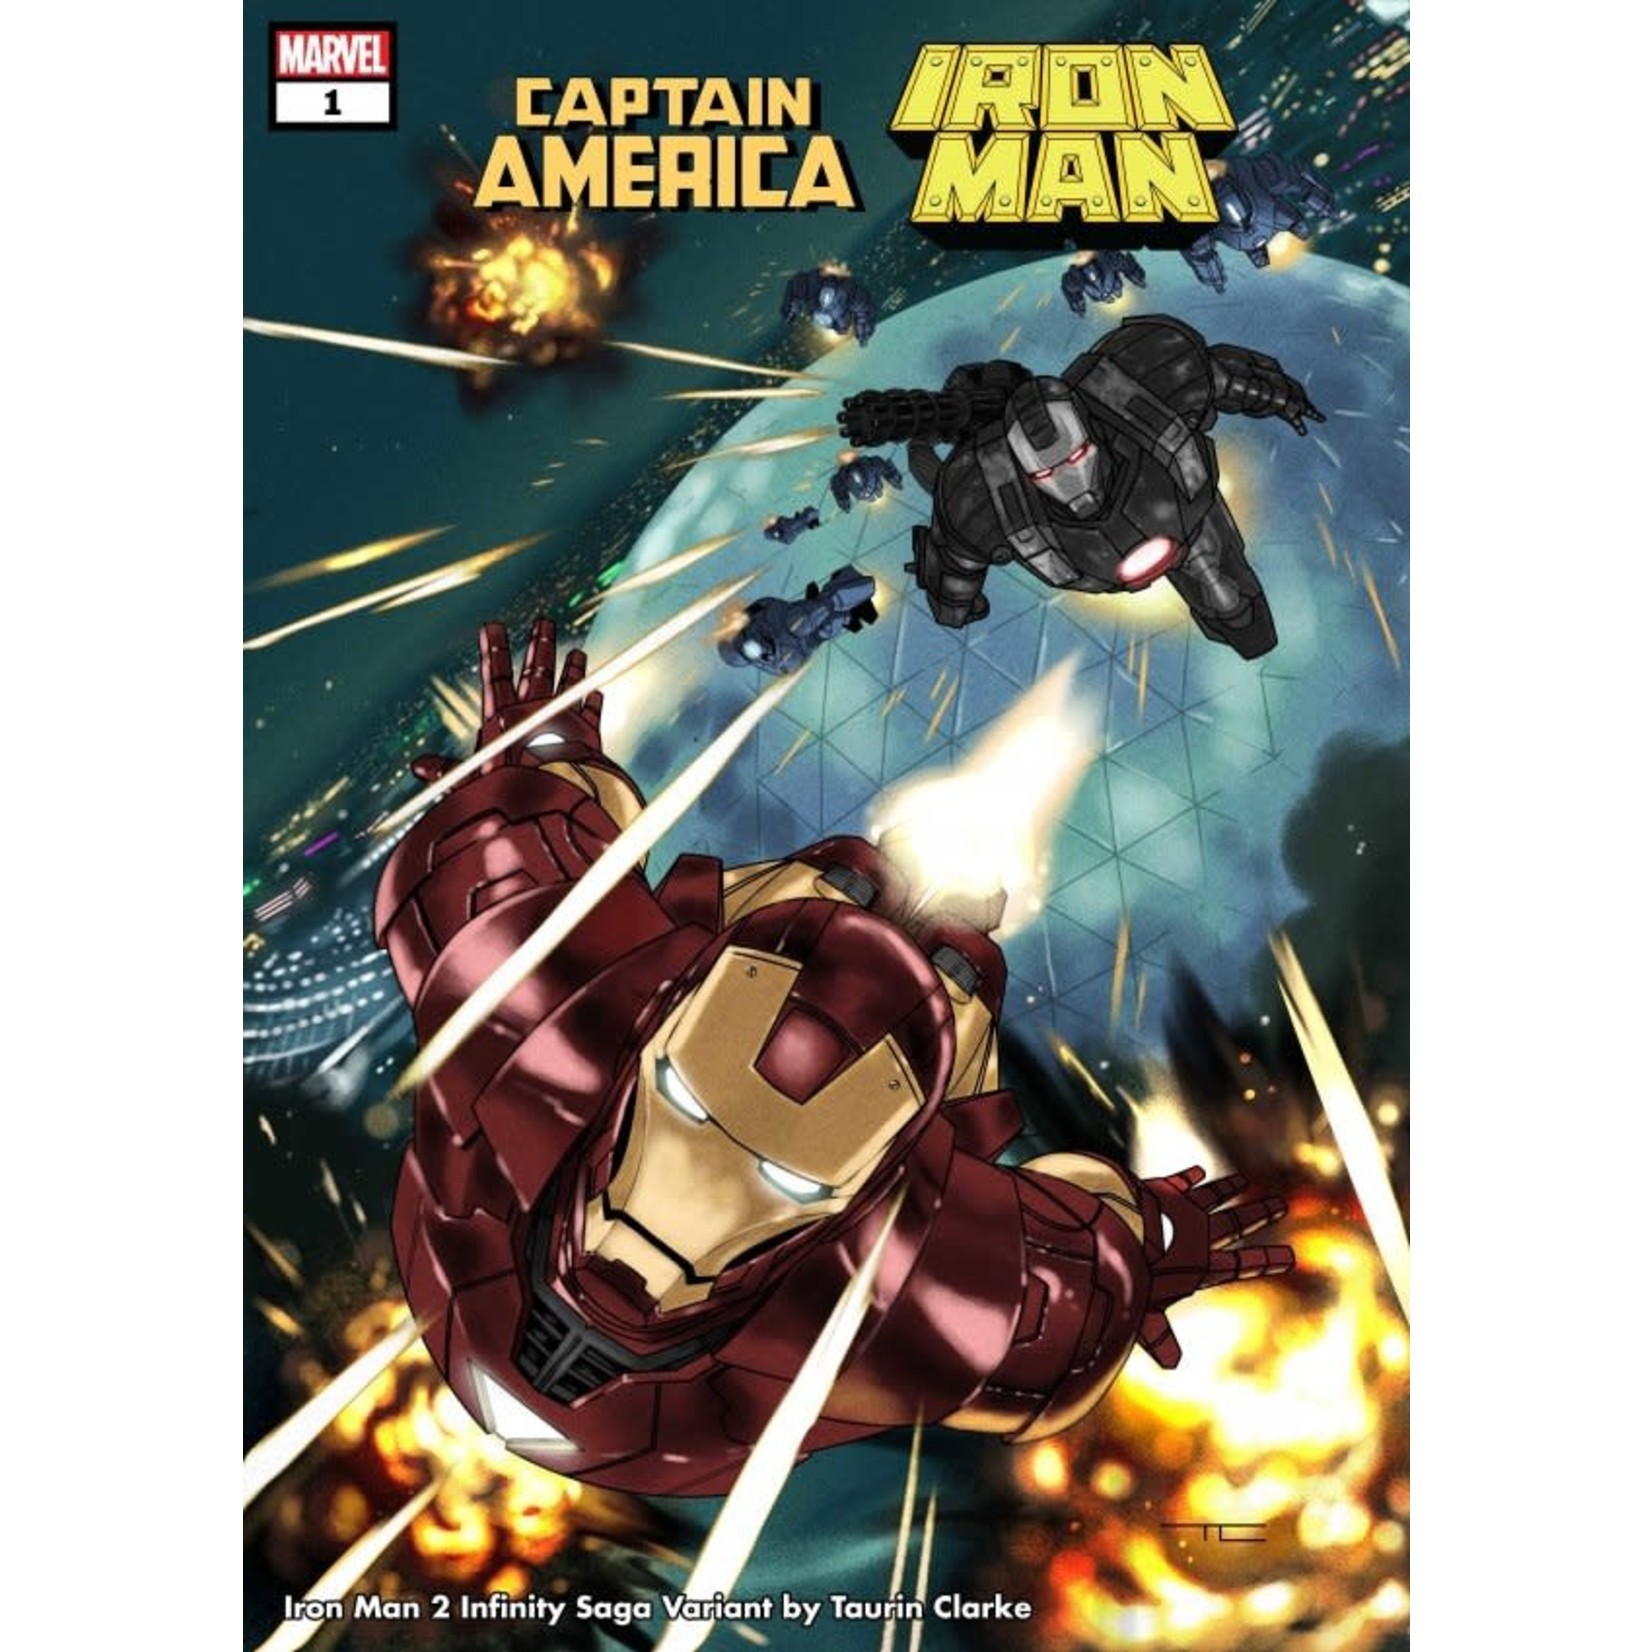 Marvel Captain America / Iron Man #1 Clarke Infinity Saga Variant